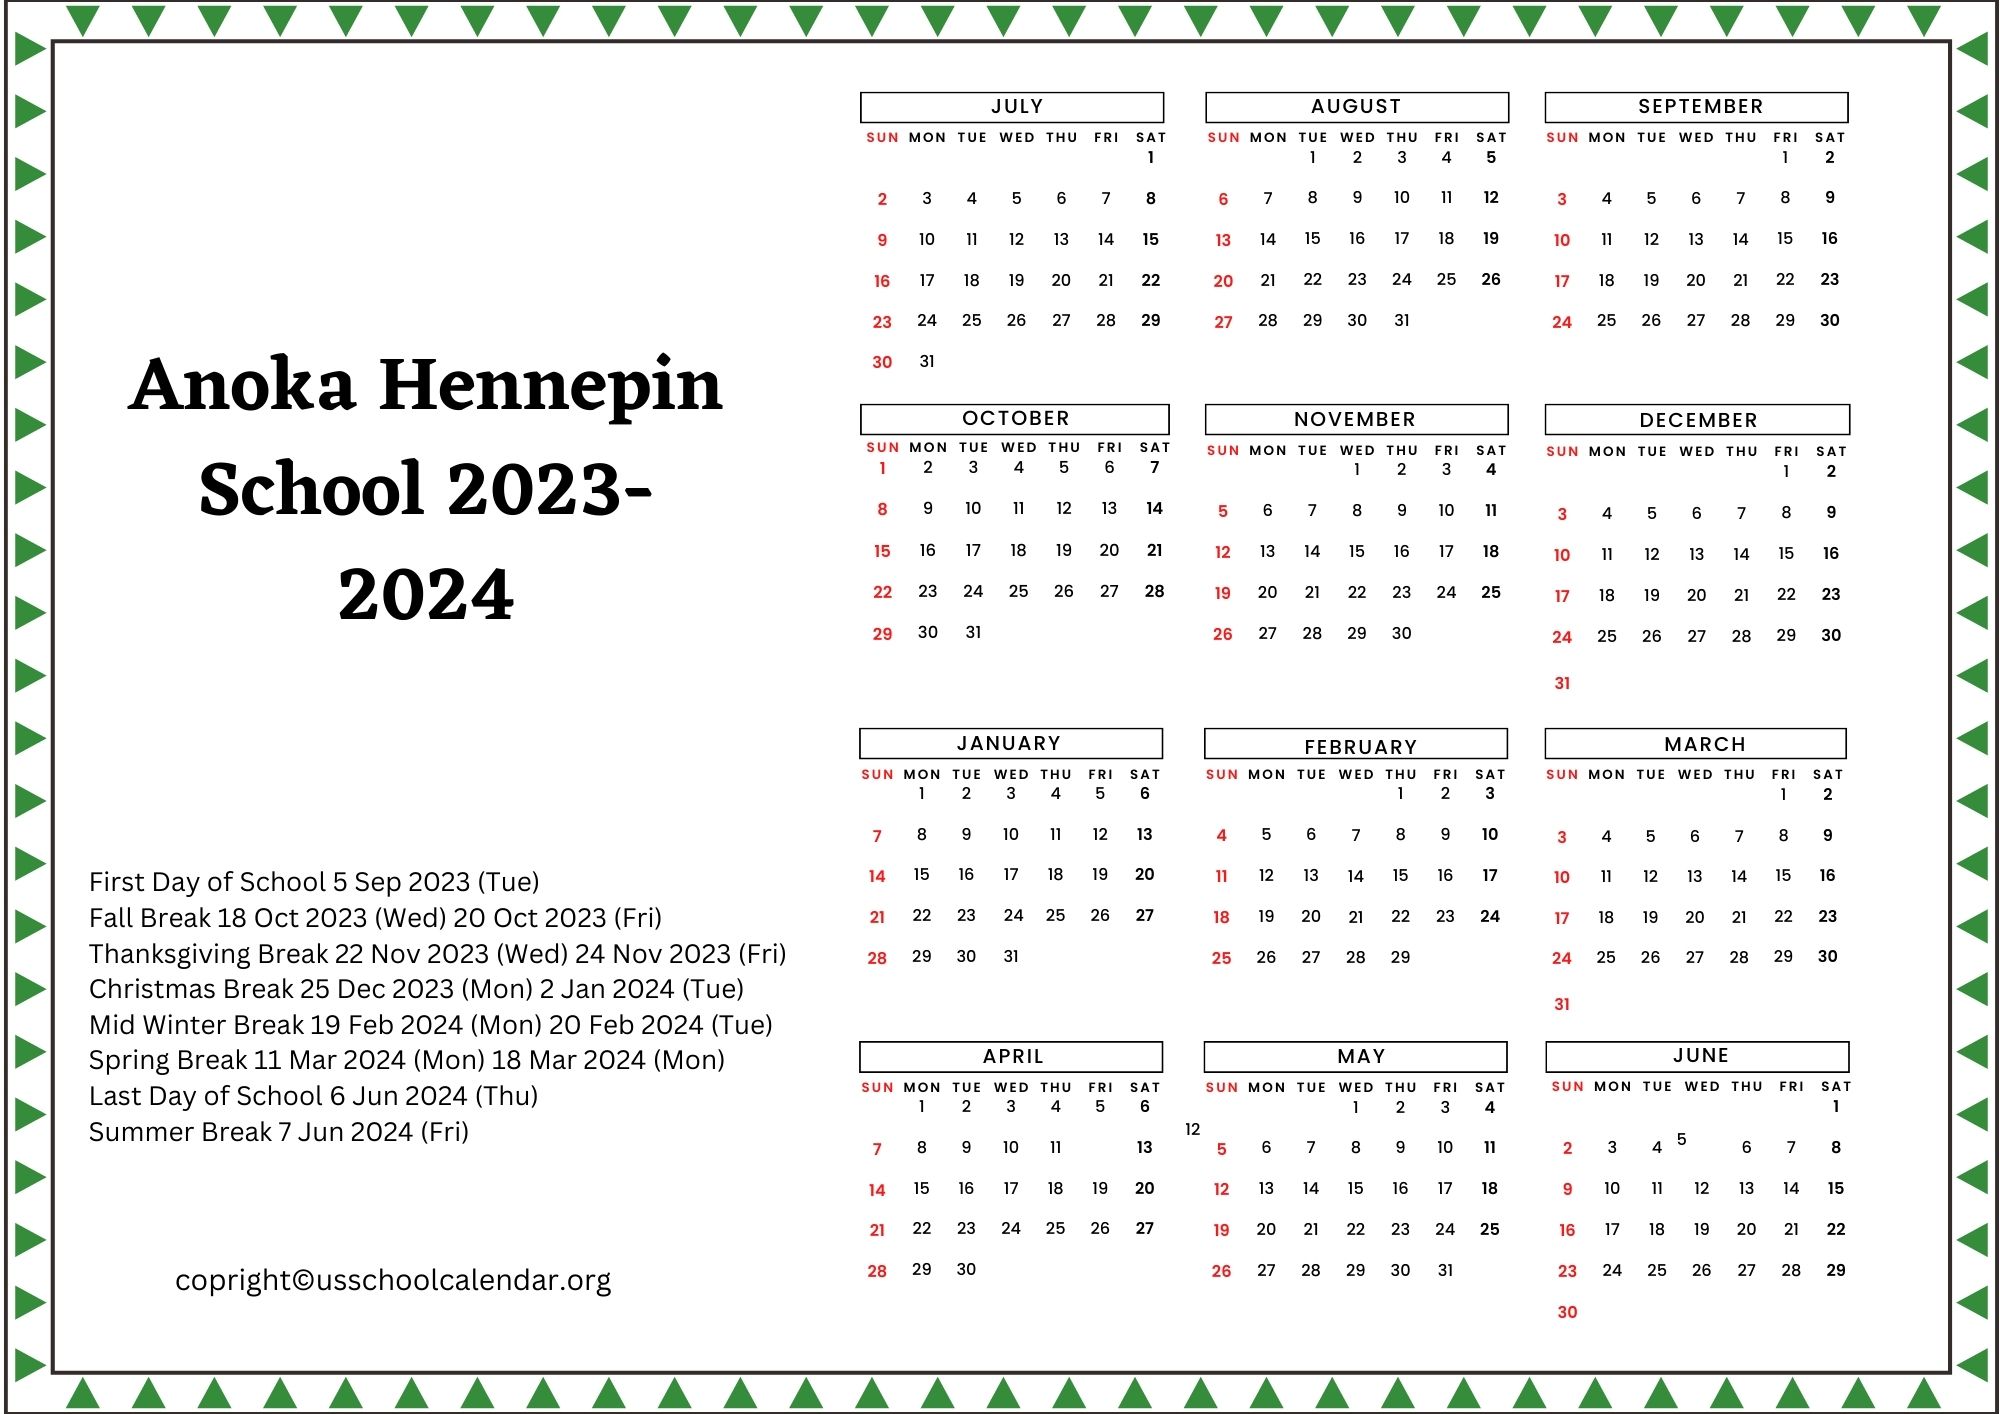 anoka-hennepin-school-calendar-with-holidays-2023-2024